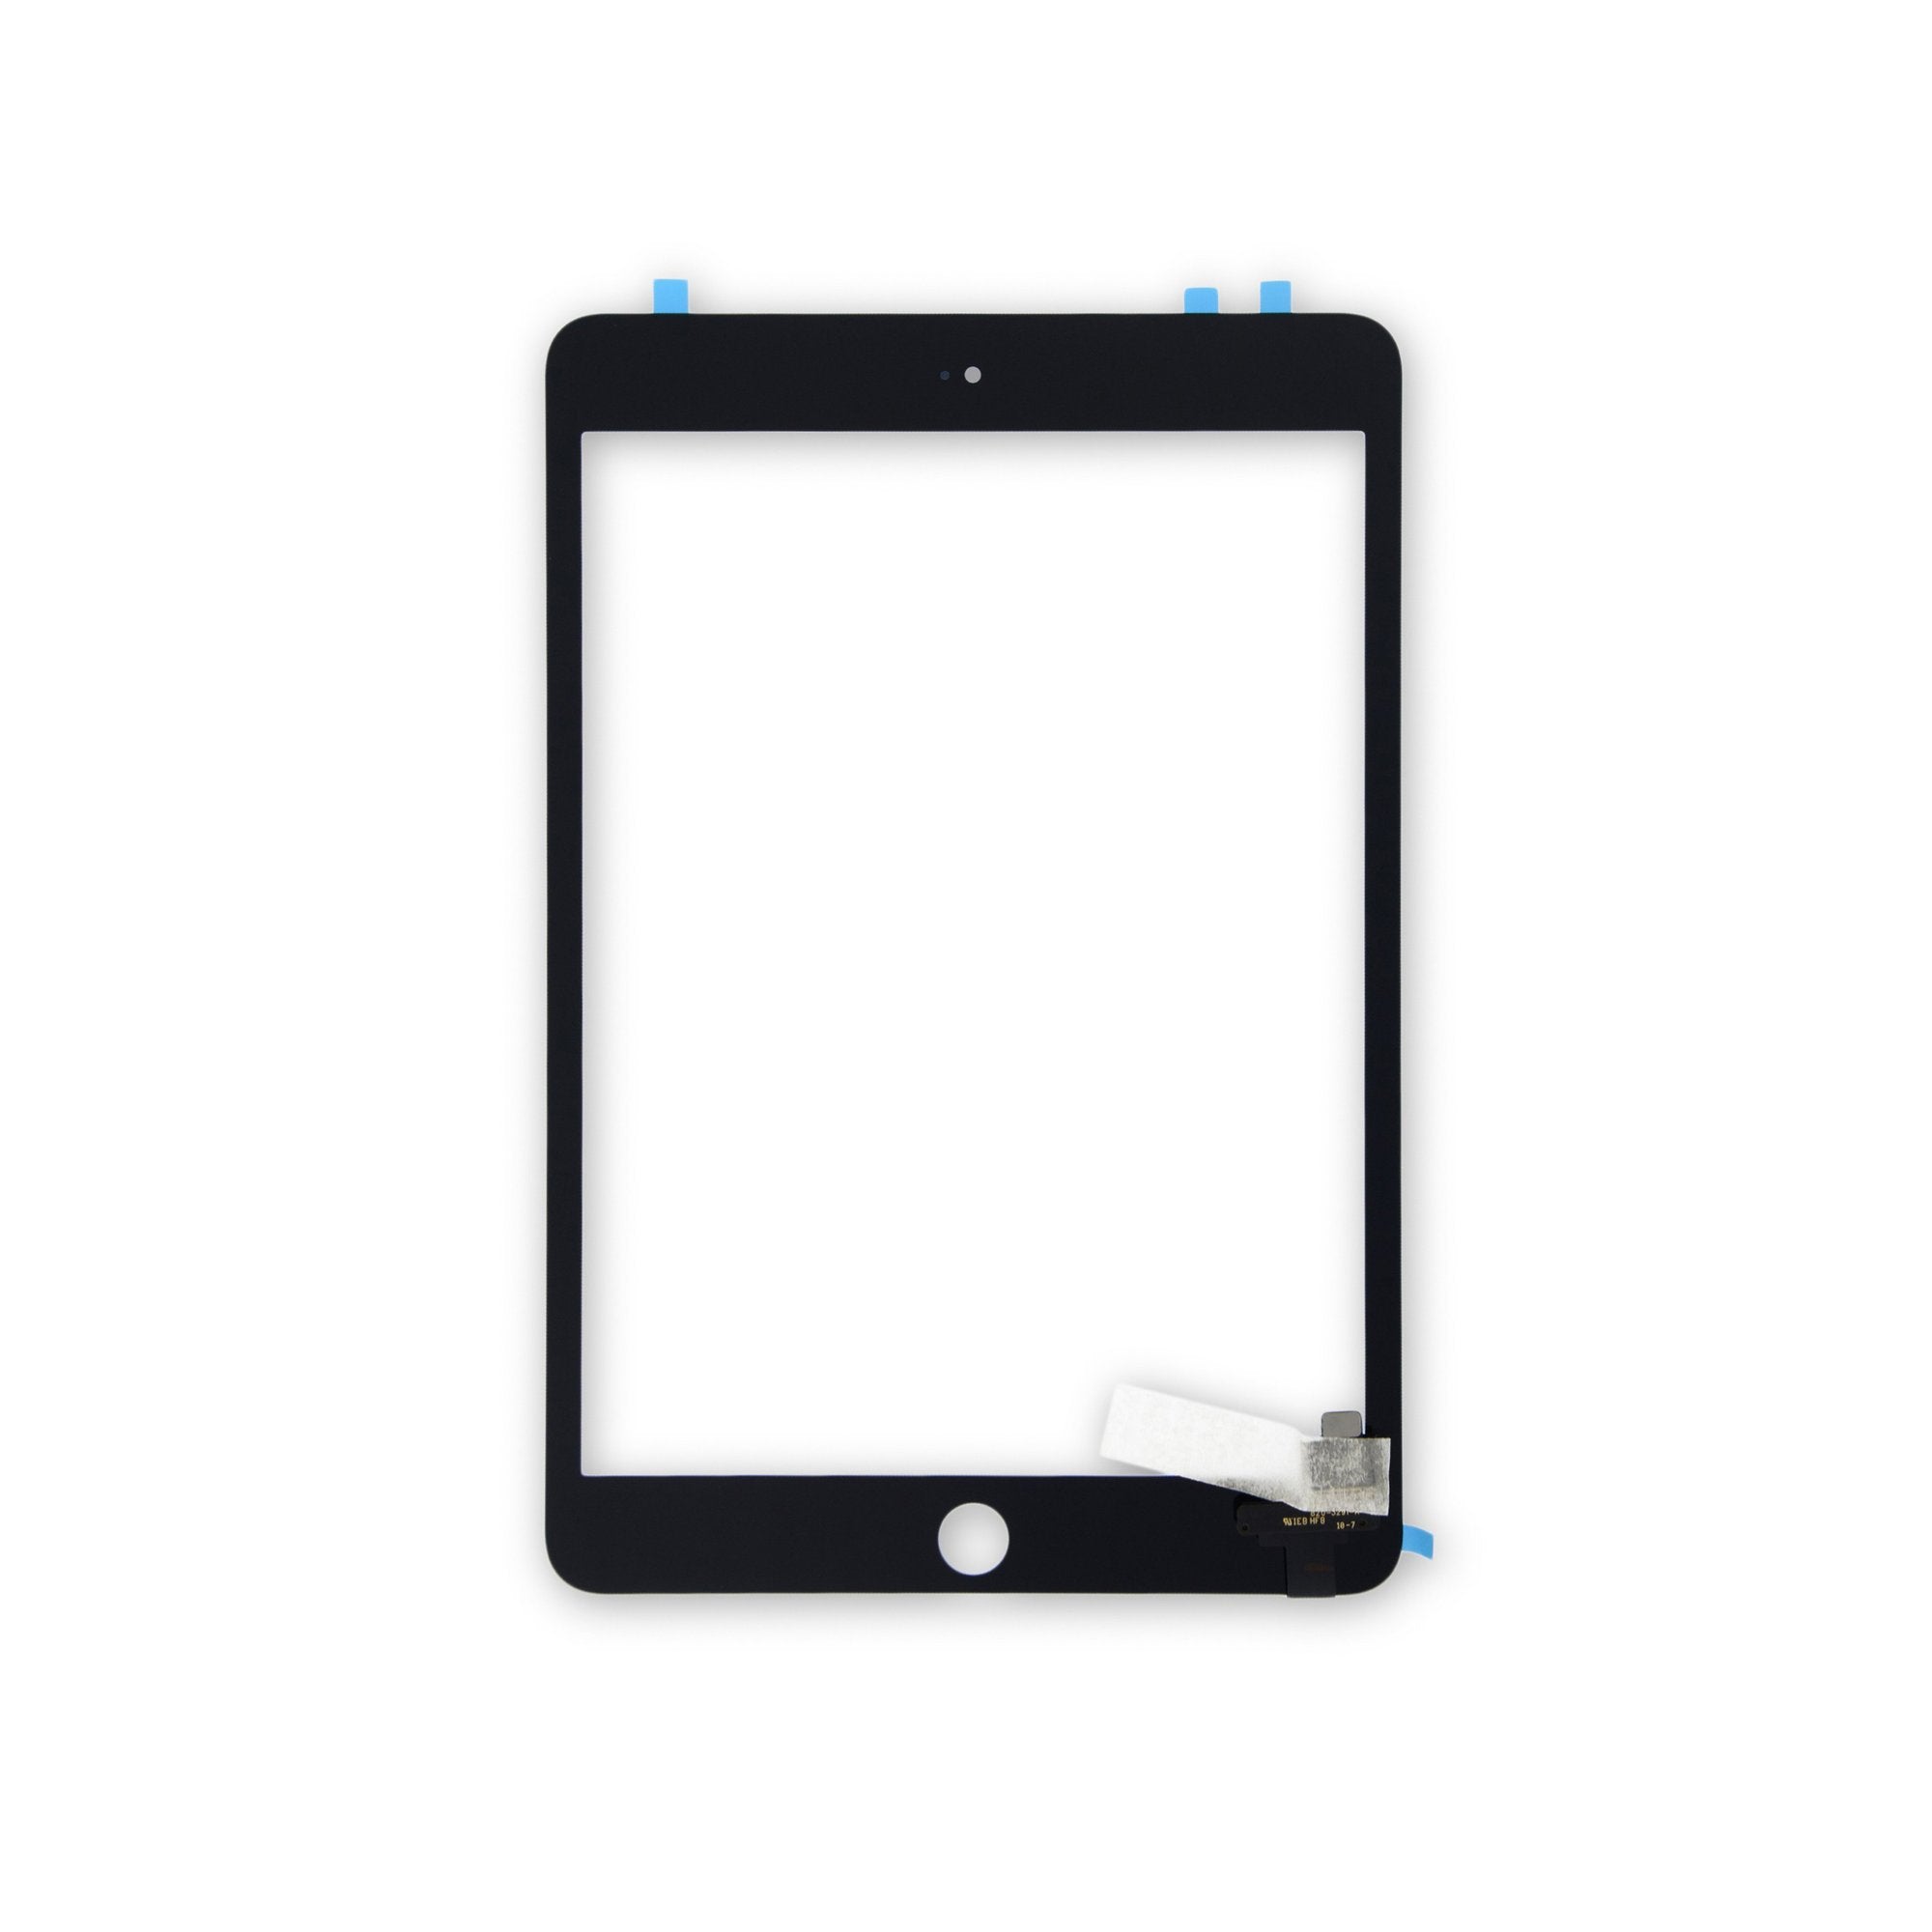 iPad mini 3 Screen Digitizer Black New Part Only